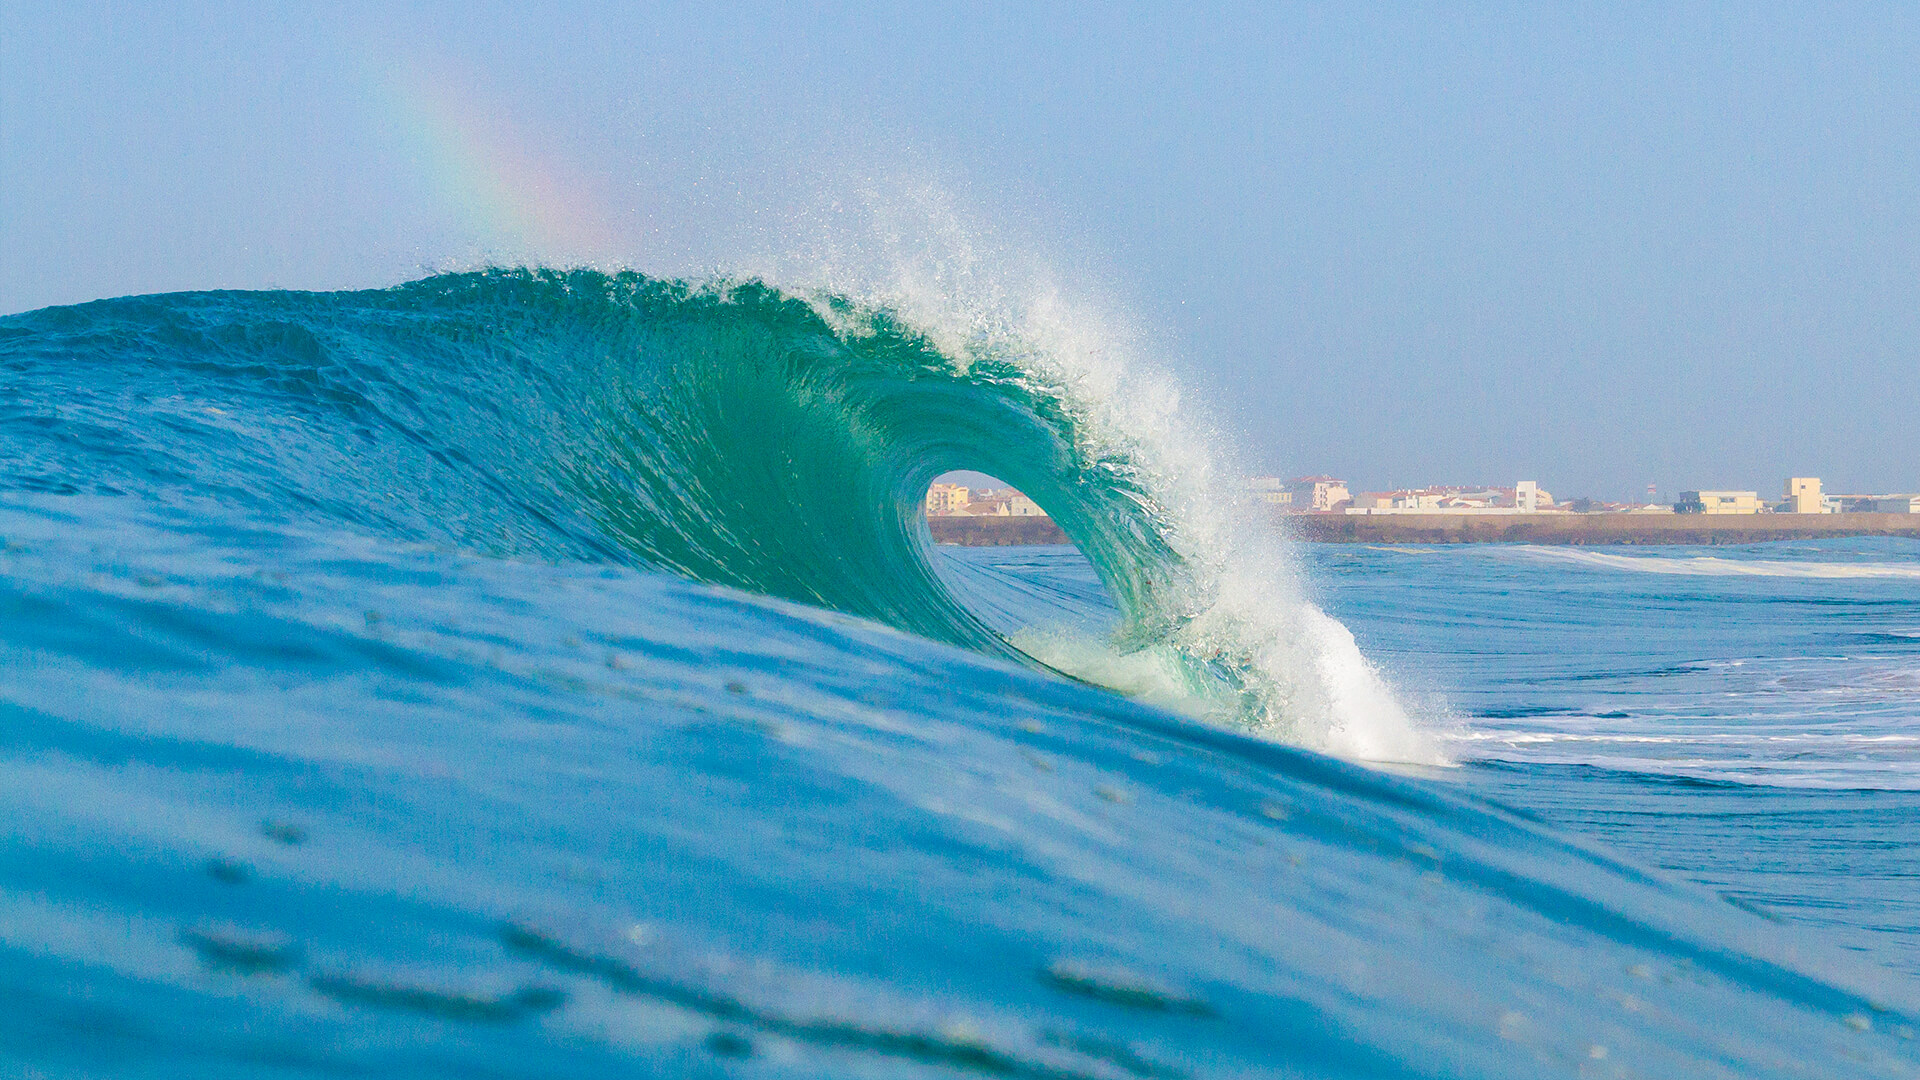 Portugal Surf Rentals - Surf Spots - Peniche